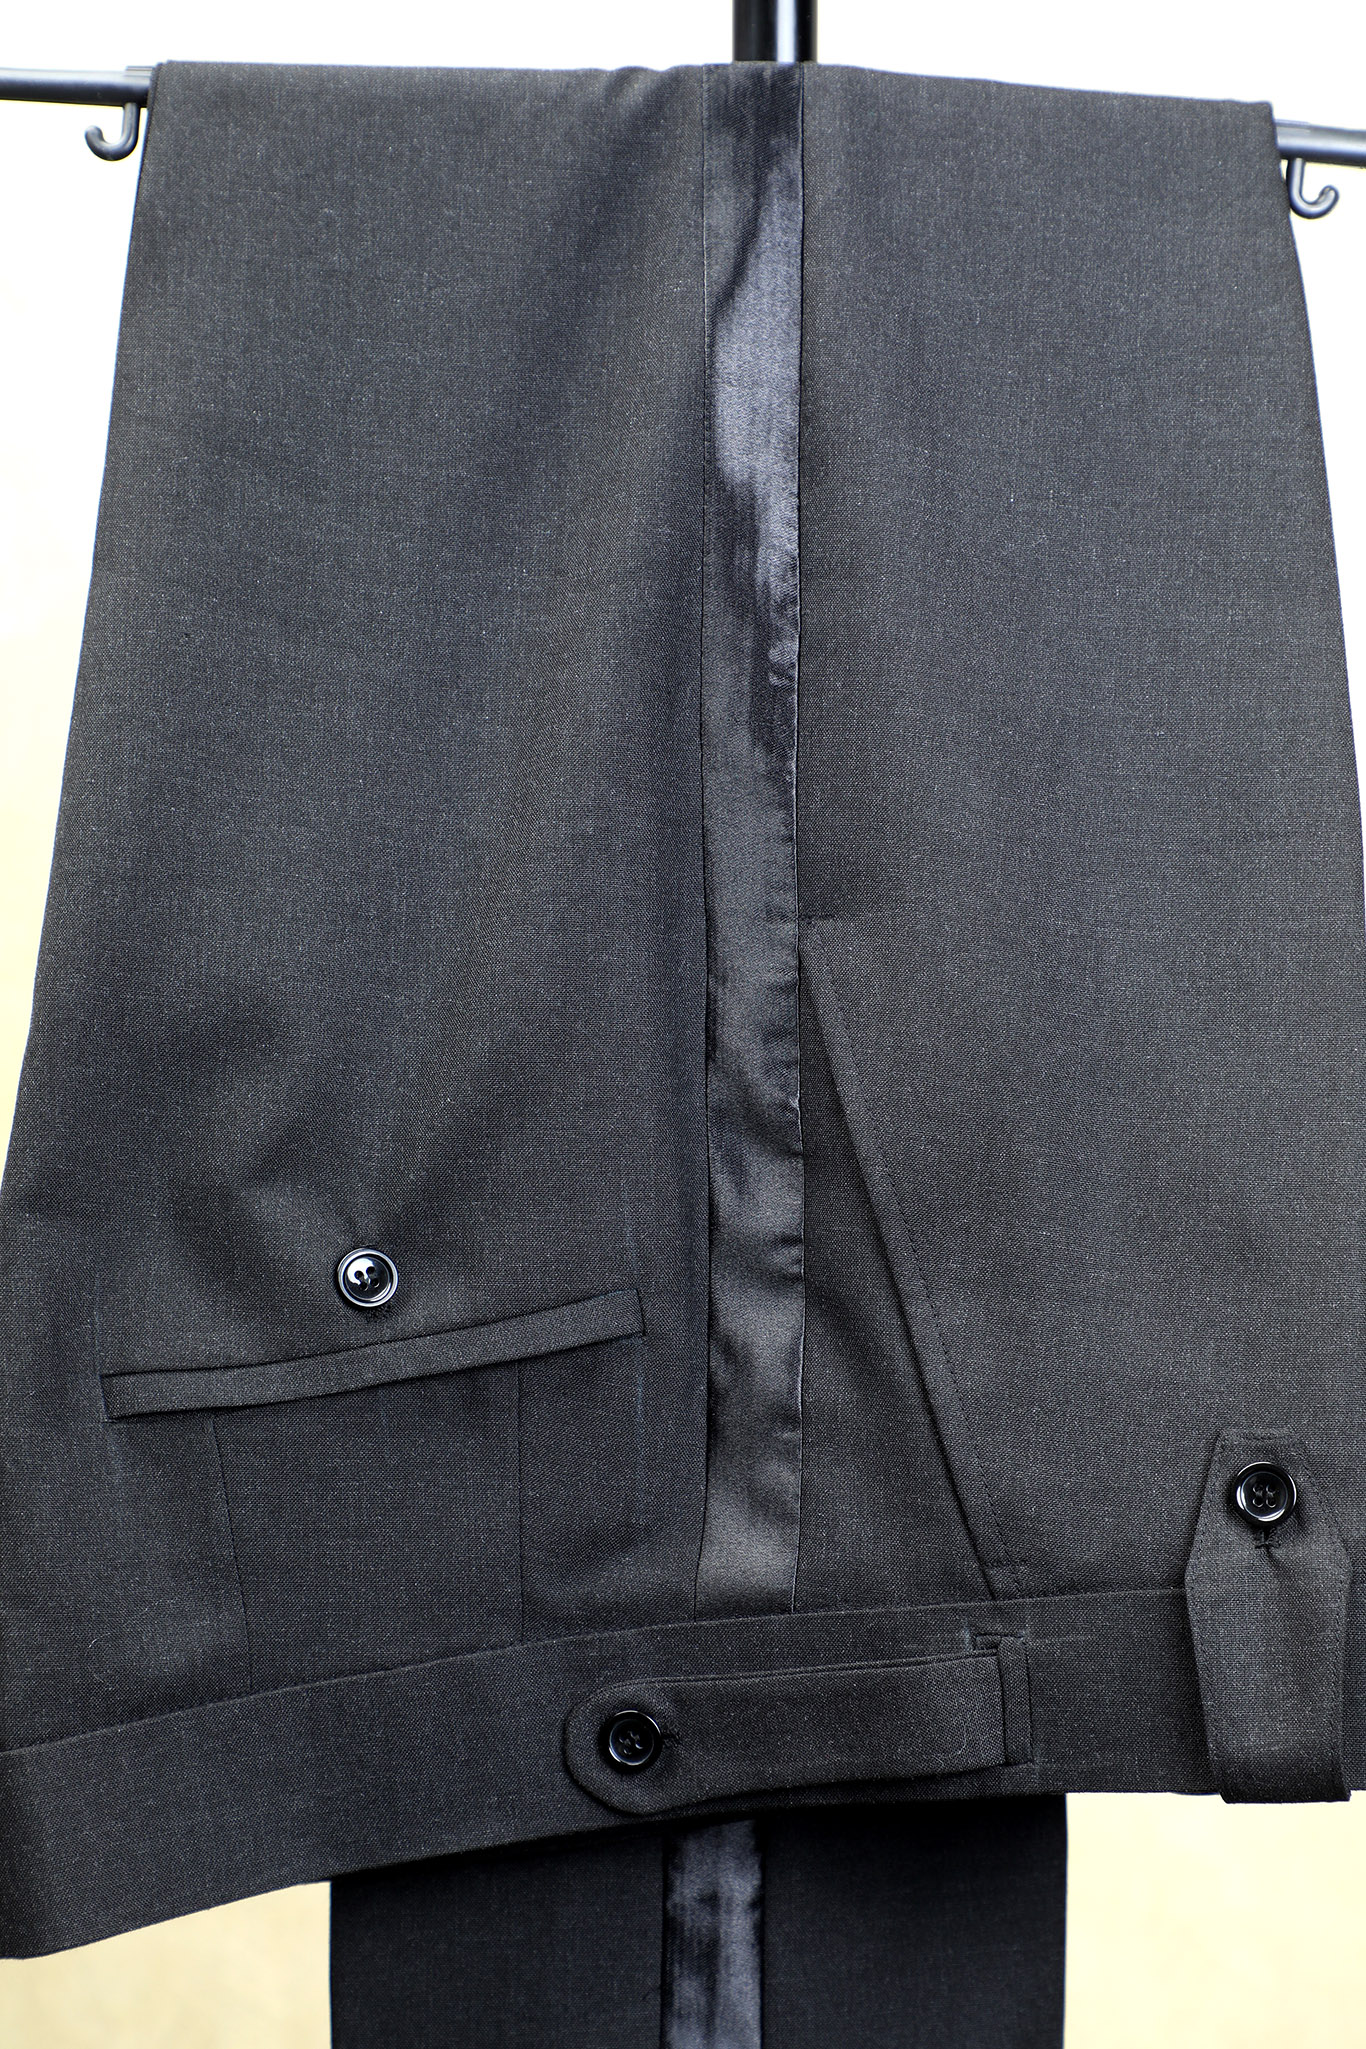 Charcoal grey tuxedo trousers in Nairobi Kenya